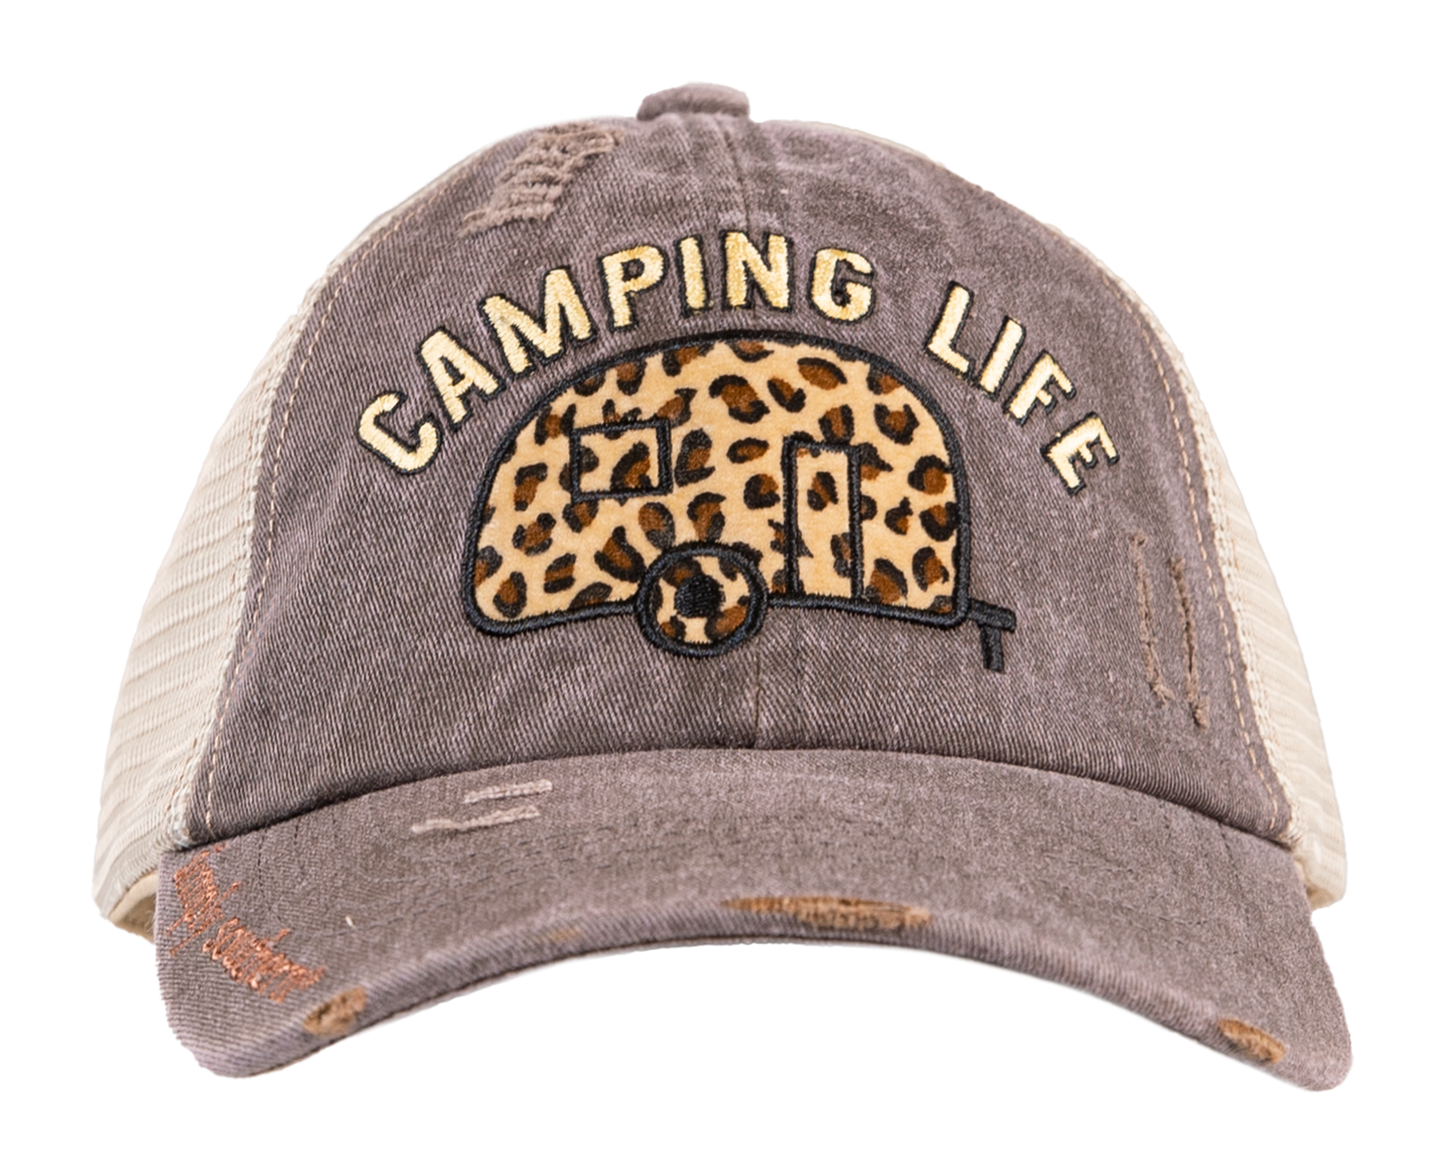 "Camping Life" Adventure Hat